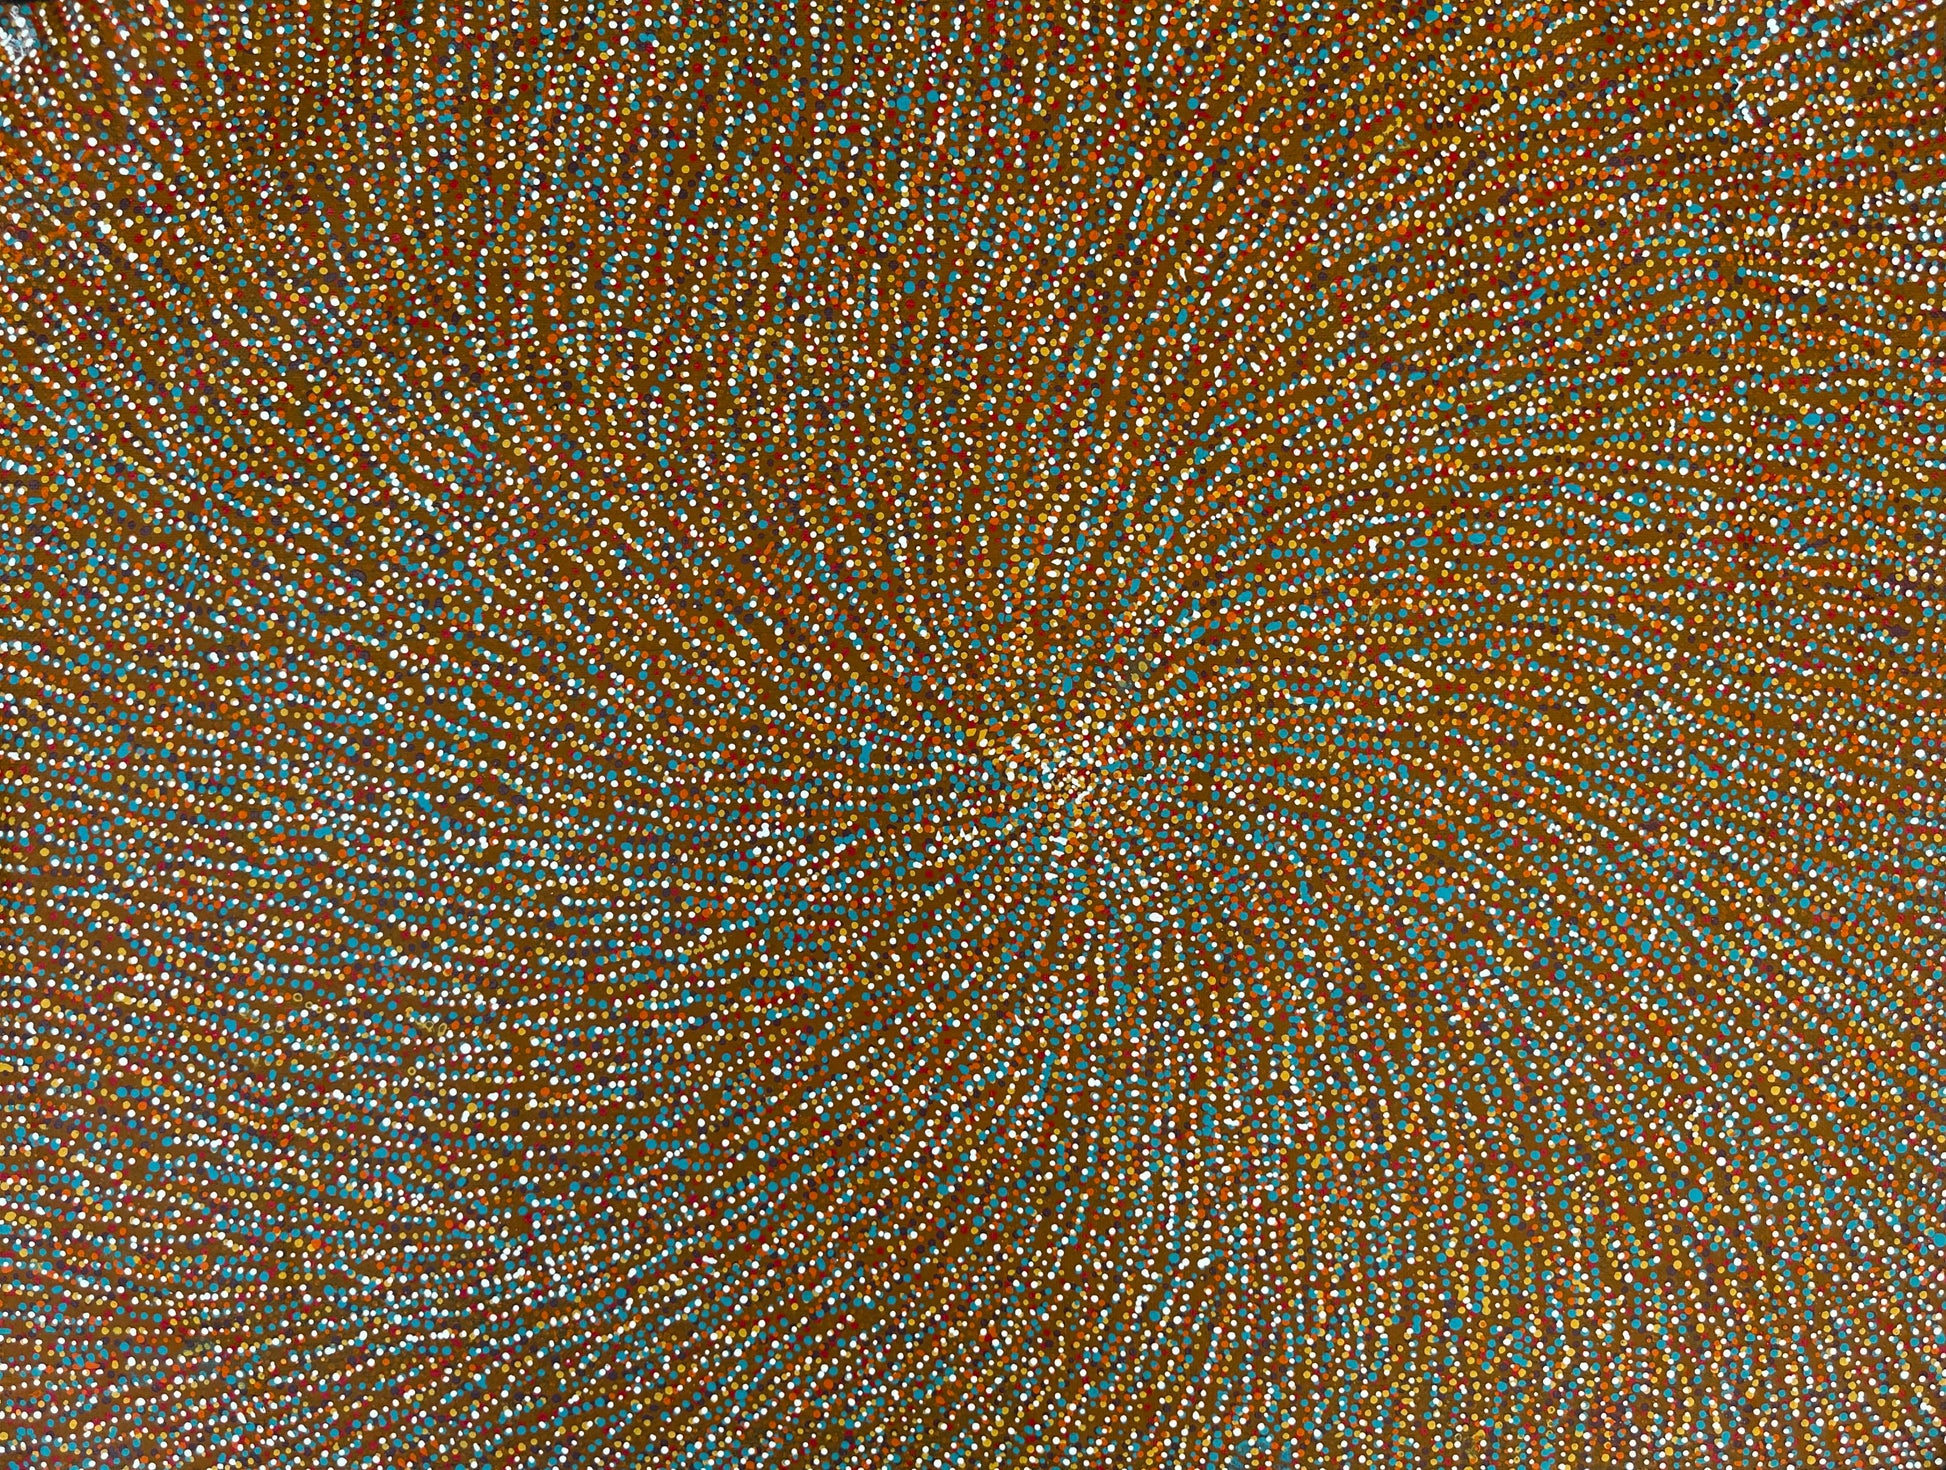 Katie Rumble Pitjarra Petyarre + Utopia + Bush Plum + Indigeous Art + Aboriginal Art + Australian Art + Darwin Based Gallery + Traditional Art + Contemporary Art + Art Story + Bush Plum Dreaming + Art for Sale + Painting For Sale